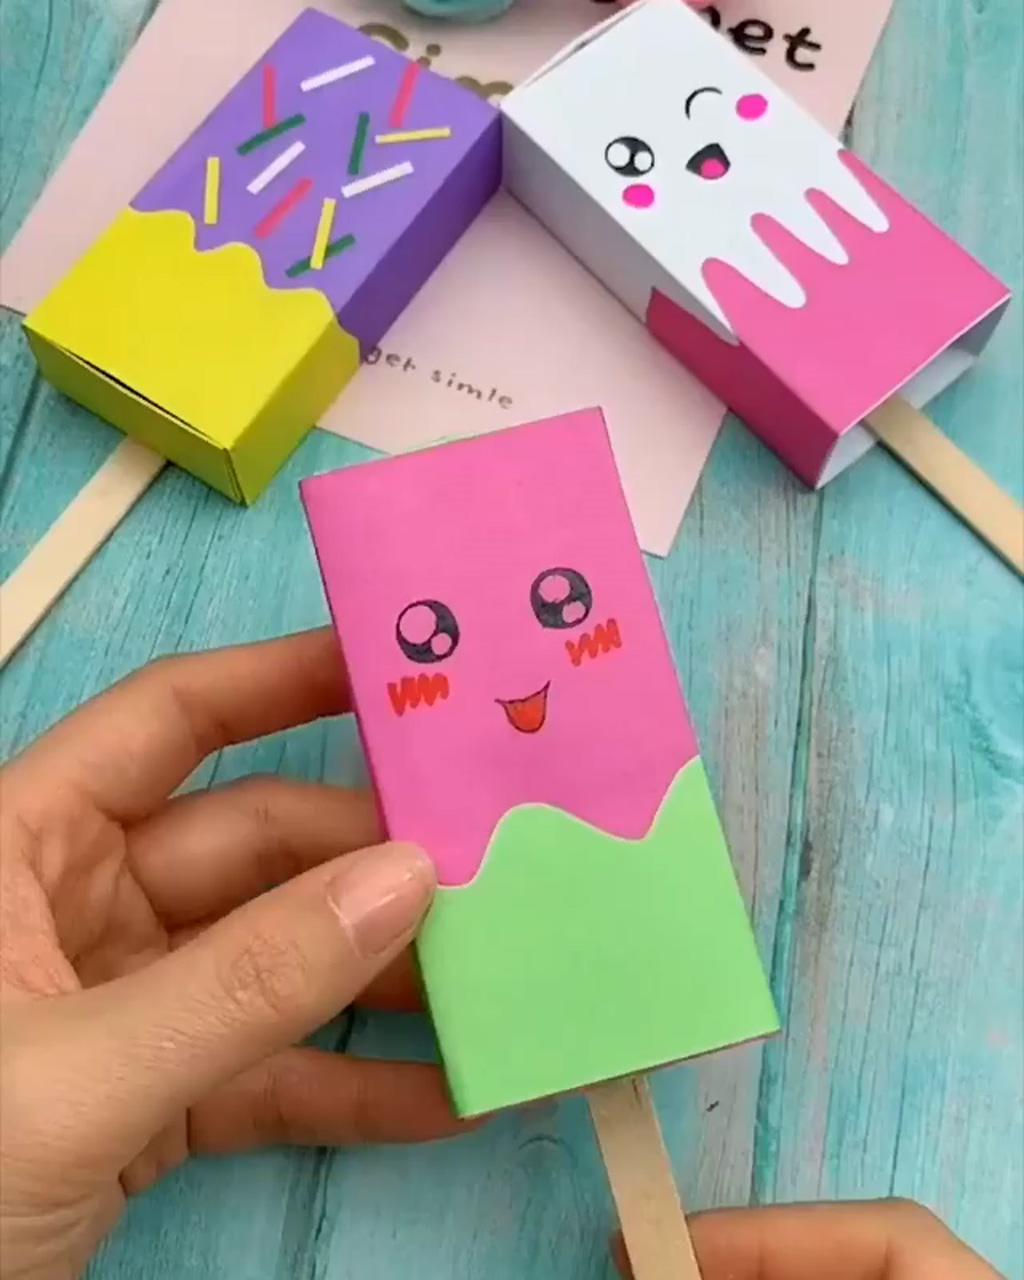 Diy easy paper art craft items by okuloncesikolik_ | hand crafts for kids